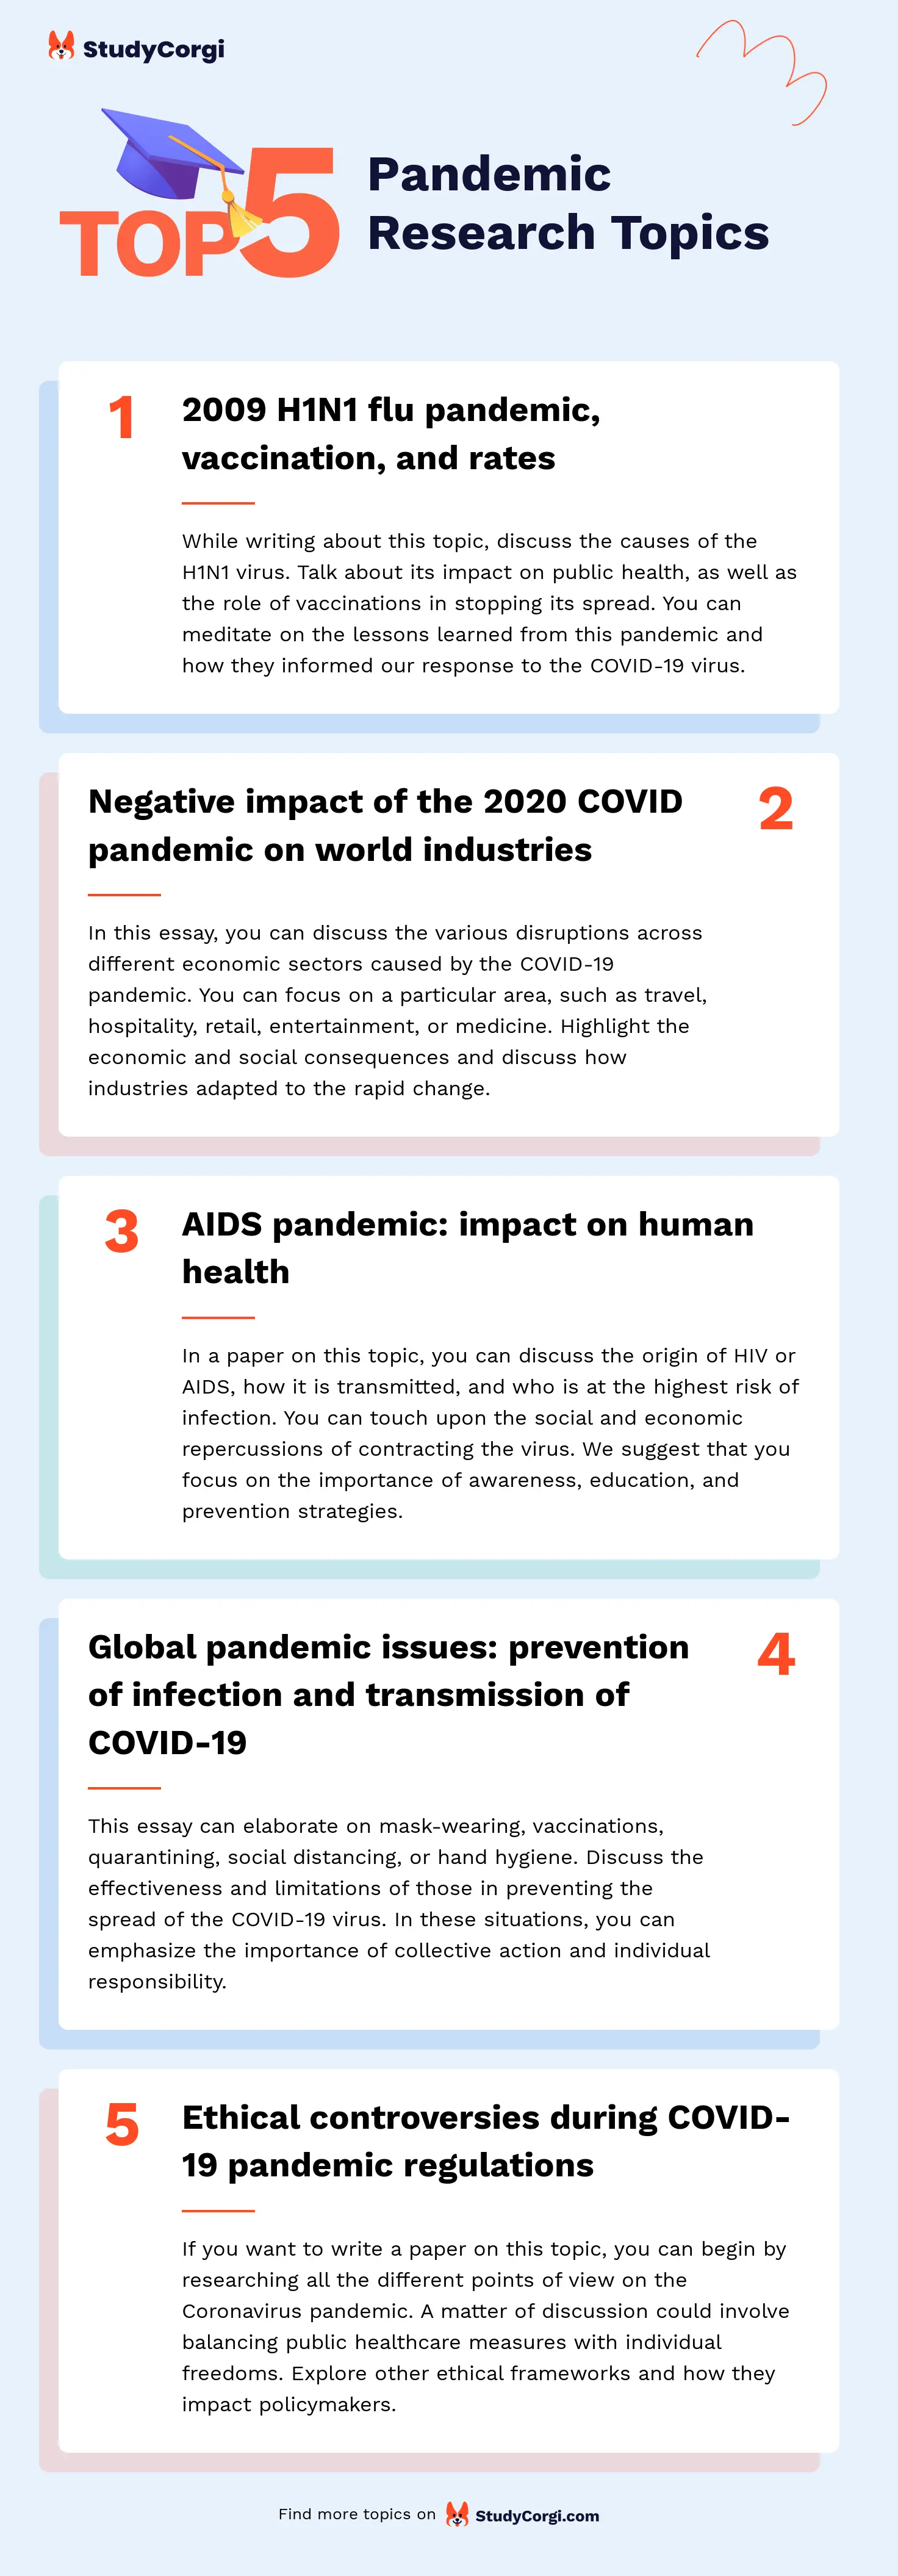 TOP-5 Pandemic Research Topics